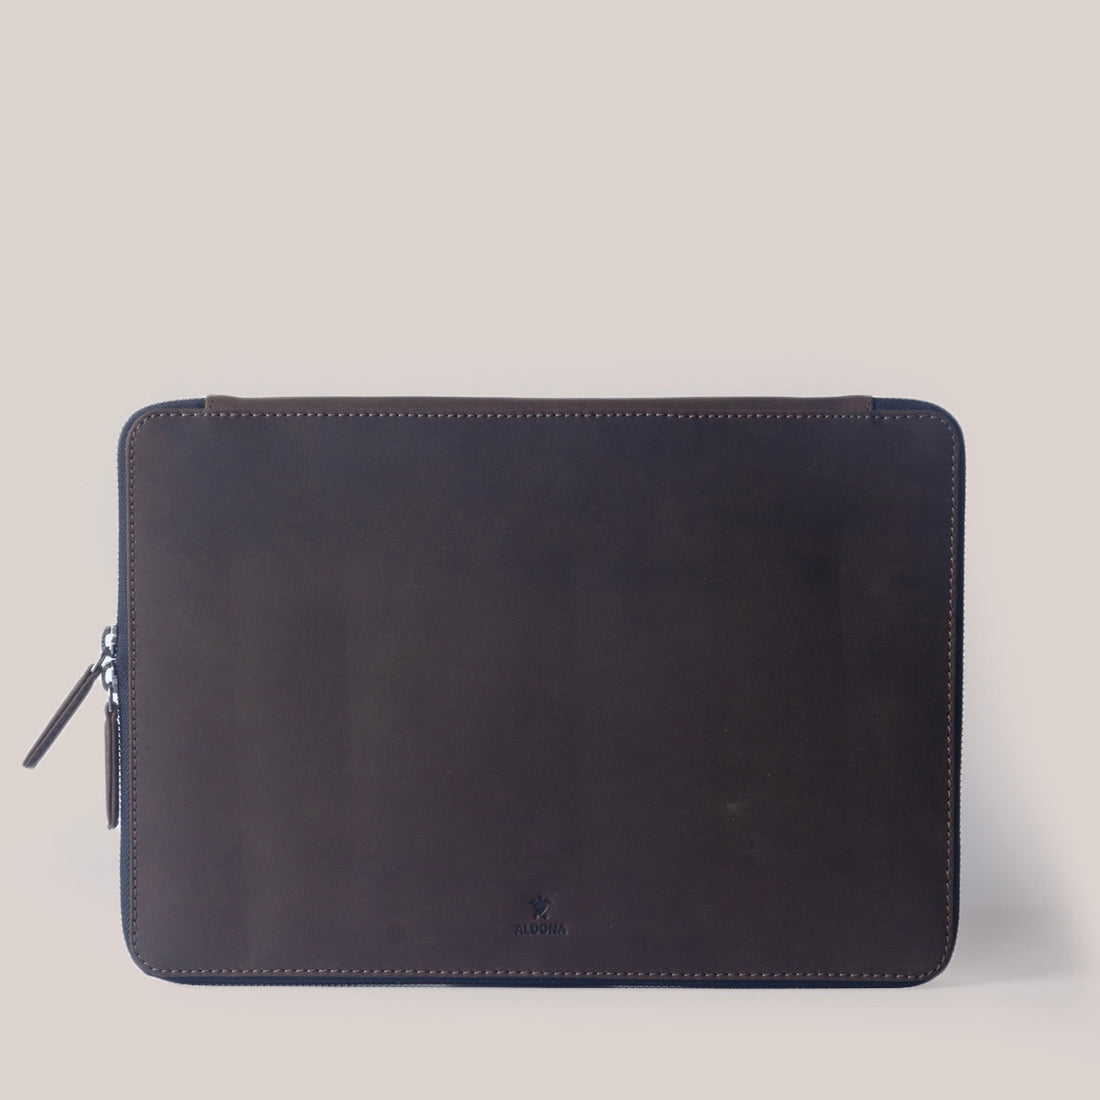 Microsoft Surface Book 13.5 Zippered Laptop Case - Onyx Black